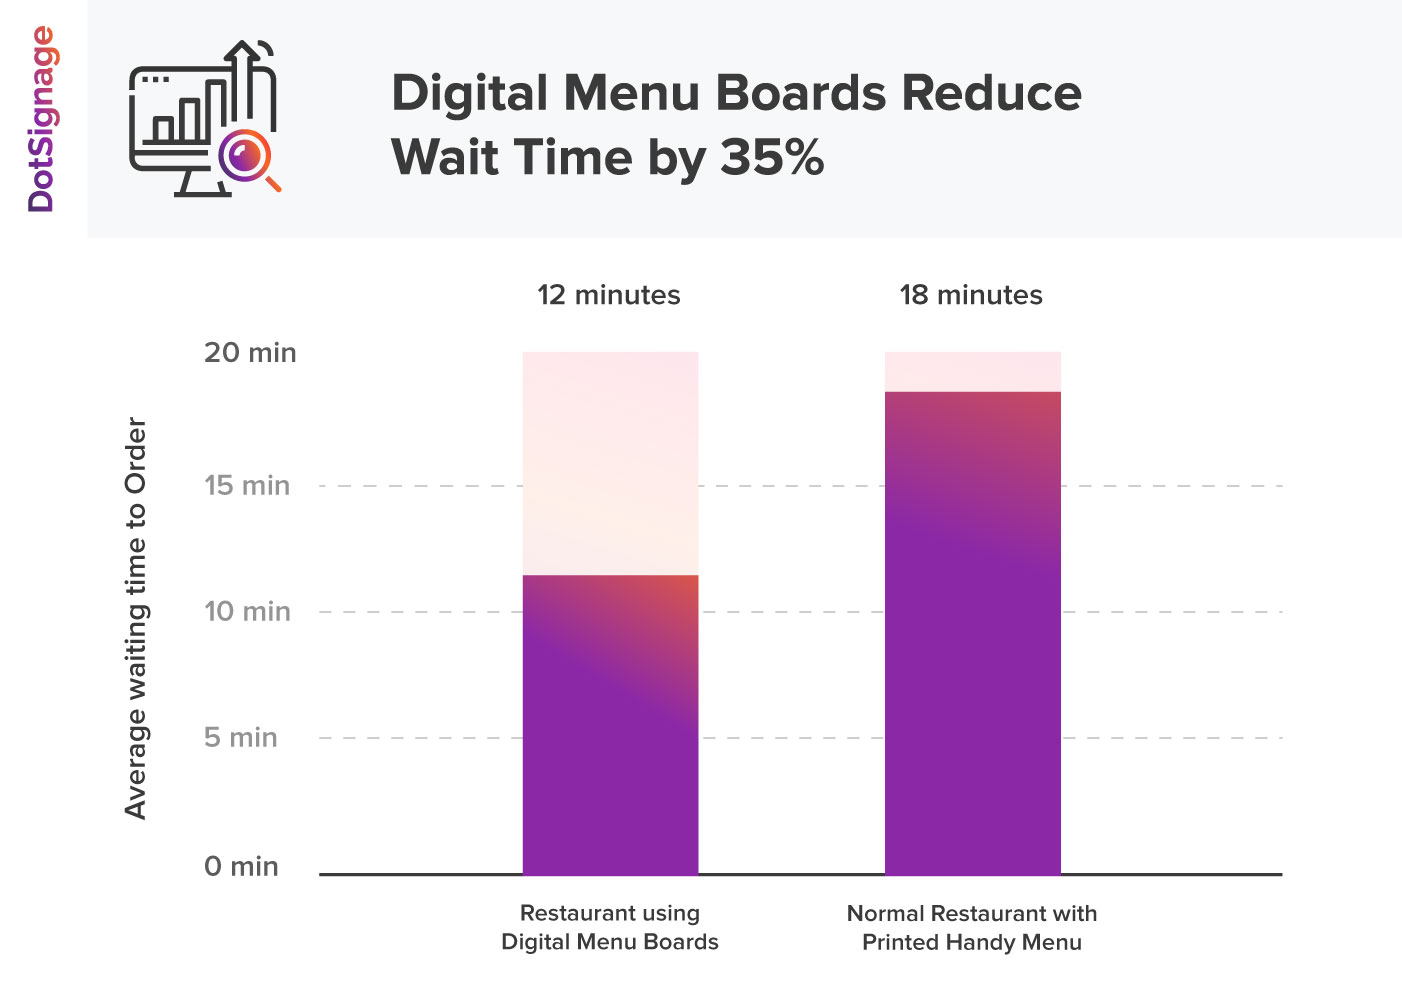 digital menu boards reduce customer wait time